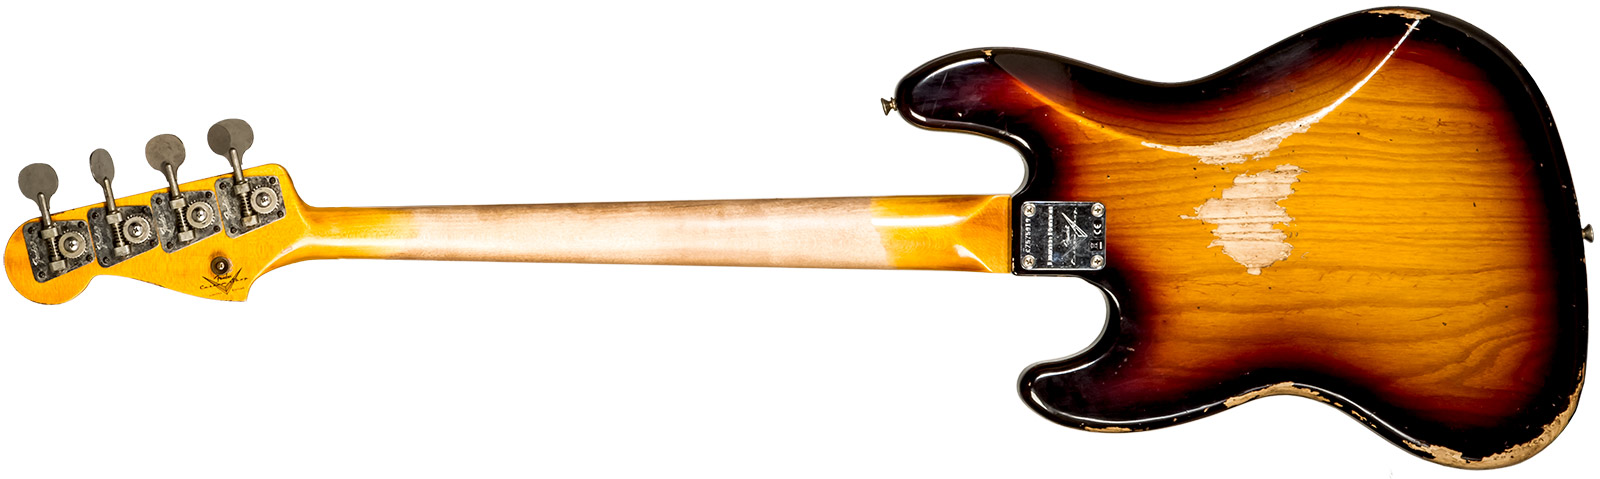 Fender Custom Shop Jazz Bass Custom Rw #cz575919 - Heavy Relic 3-color Sunburst - Solid body elektrische bas - Variation 2